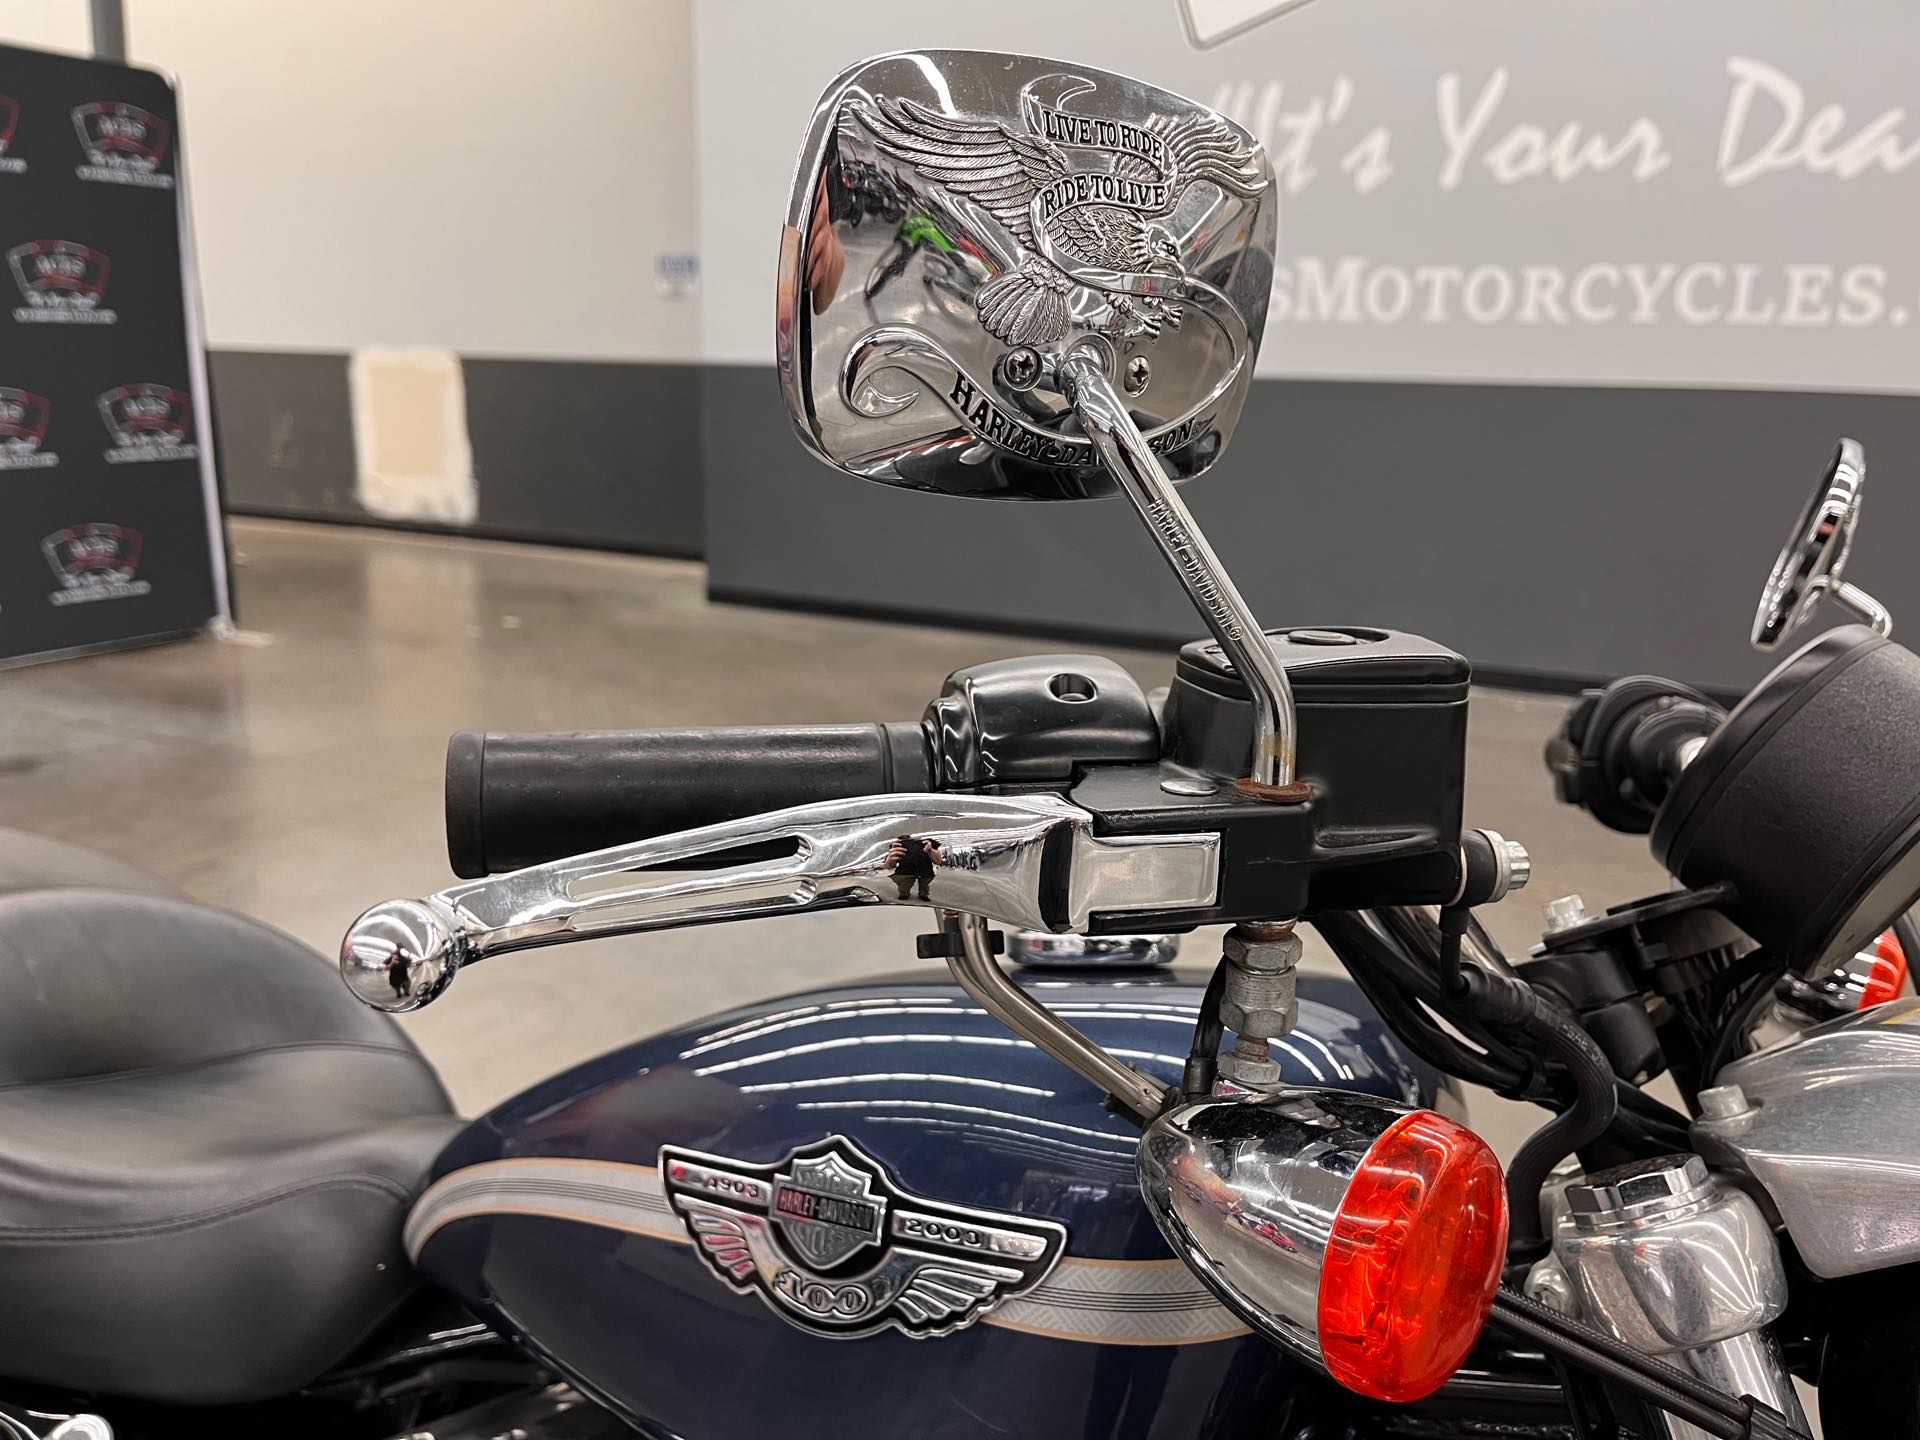 2003 Harley-Davidson XL883 at Aces Motorcycles - Denver